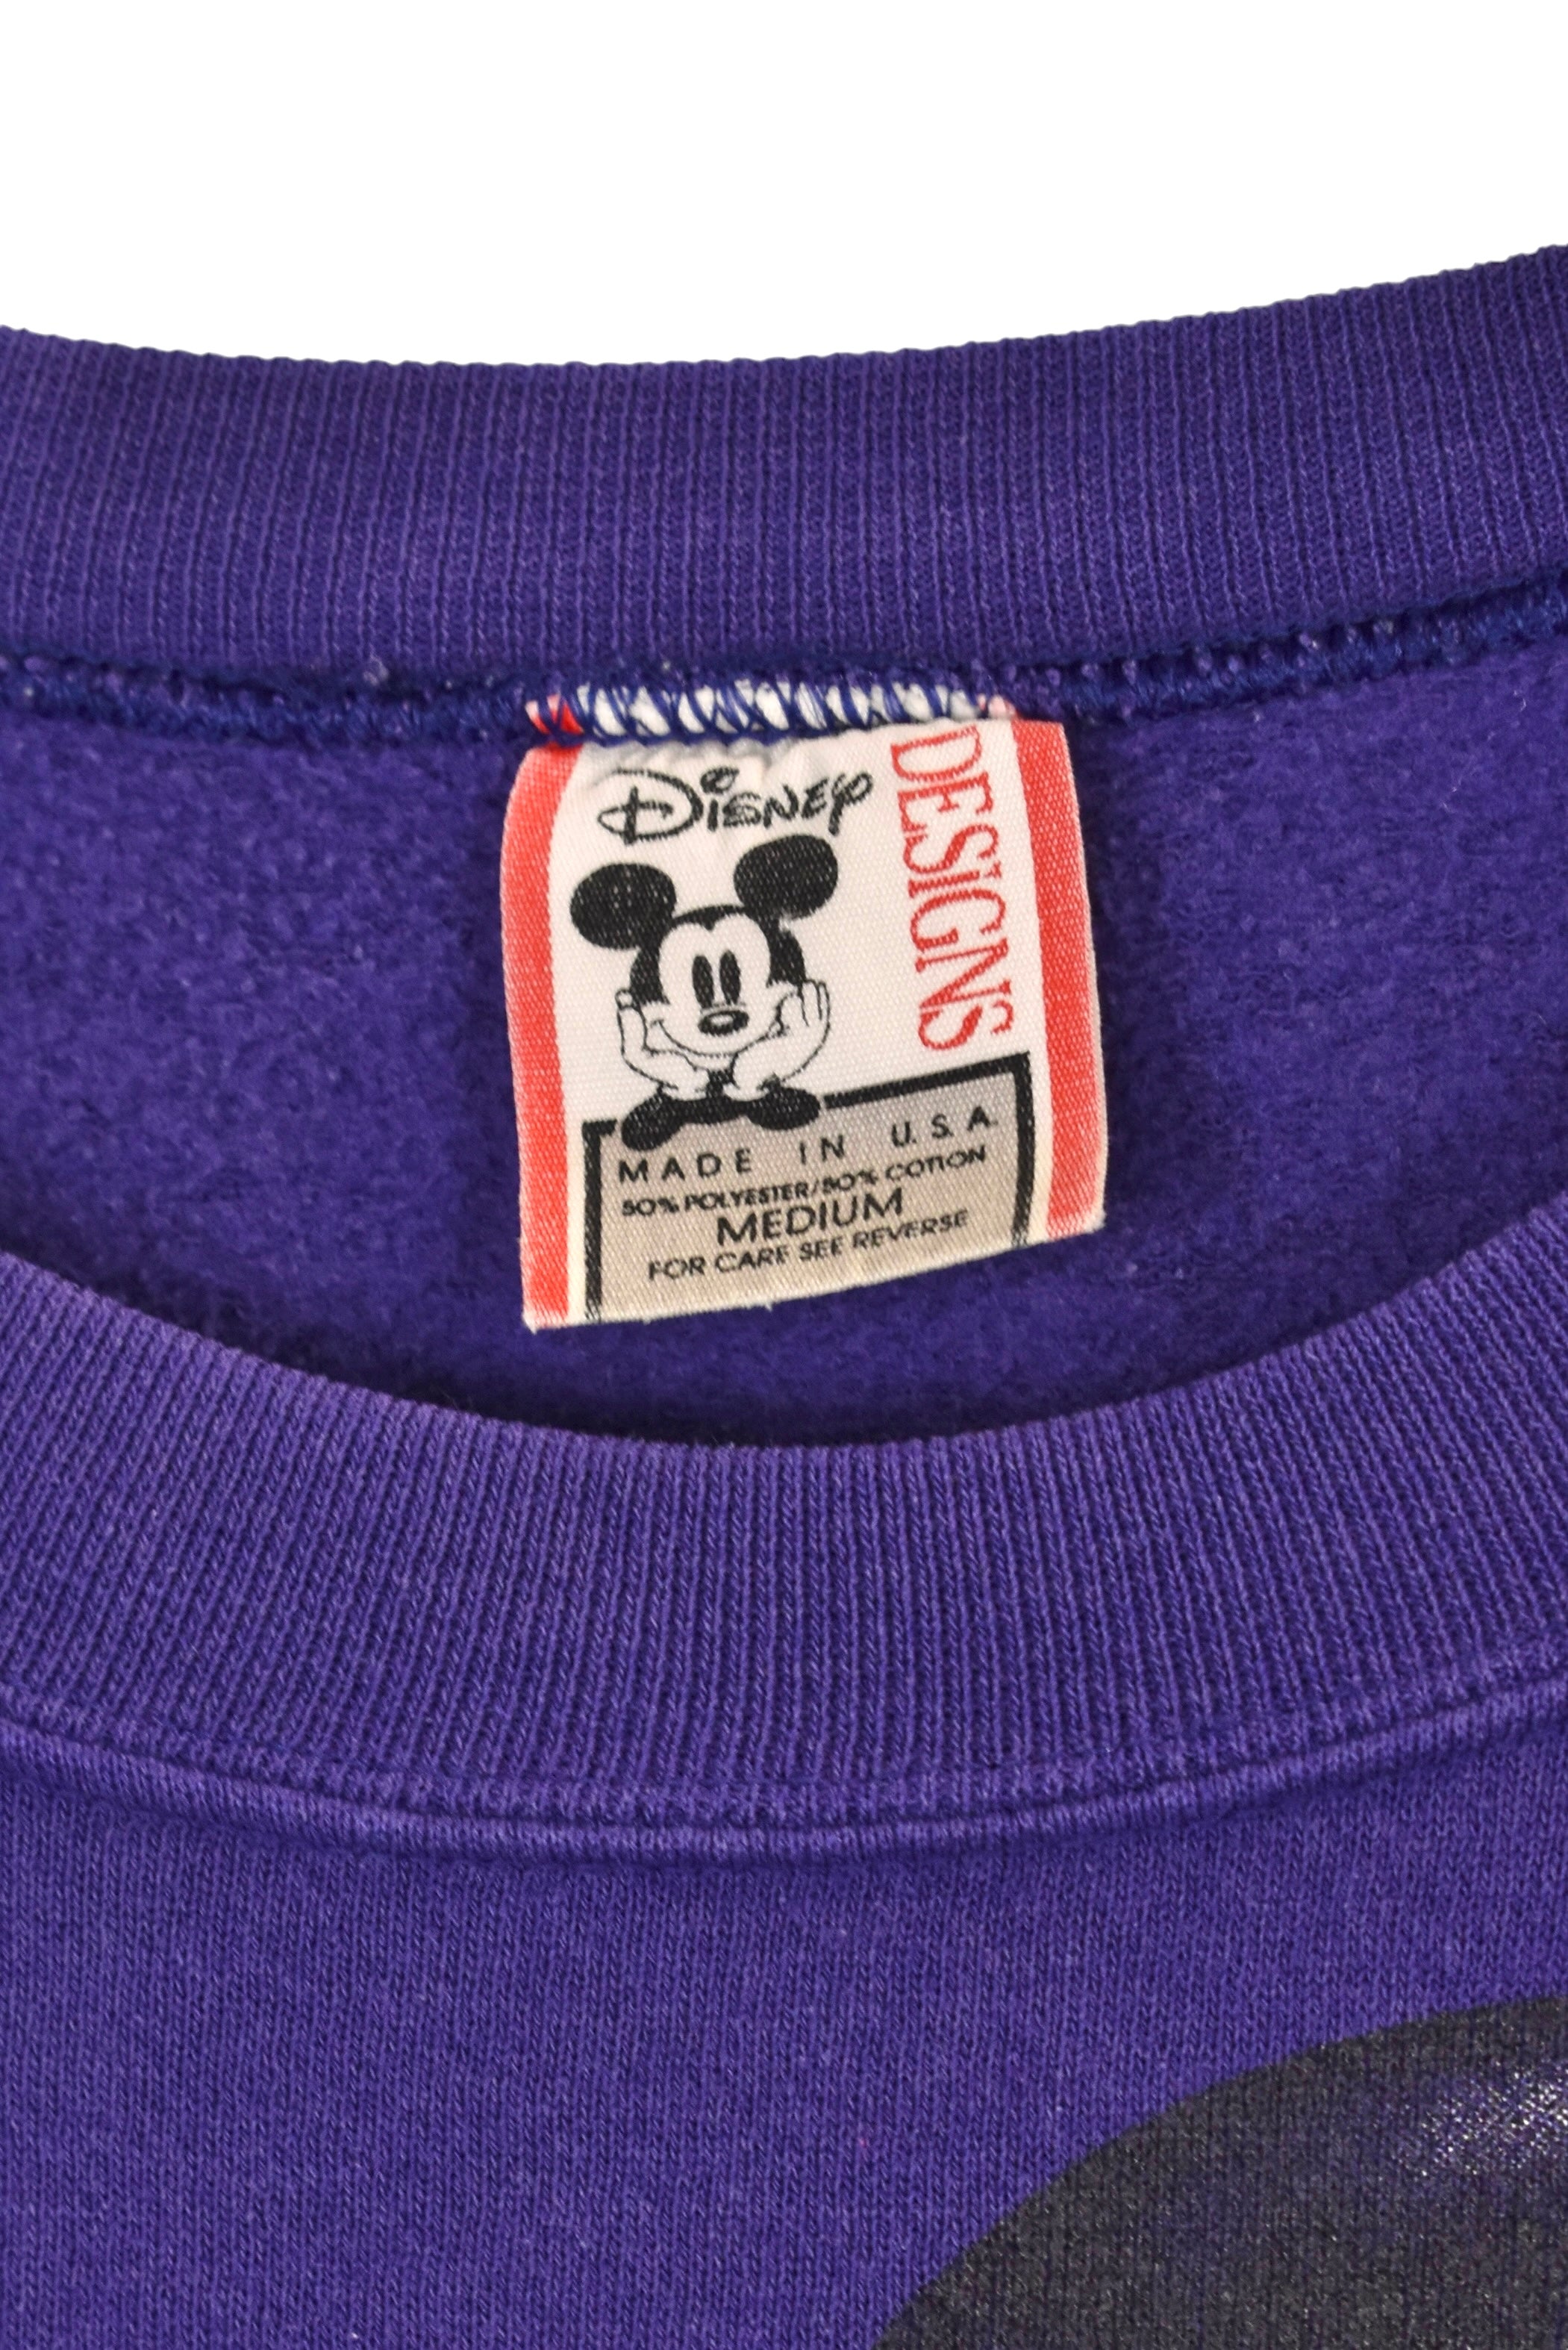 Vintage Minnie Mouse sweatshirt (M), purple Disney graphic crewneck